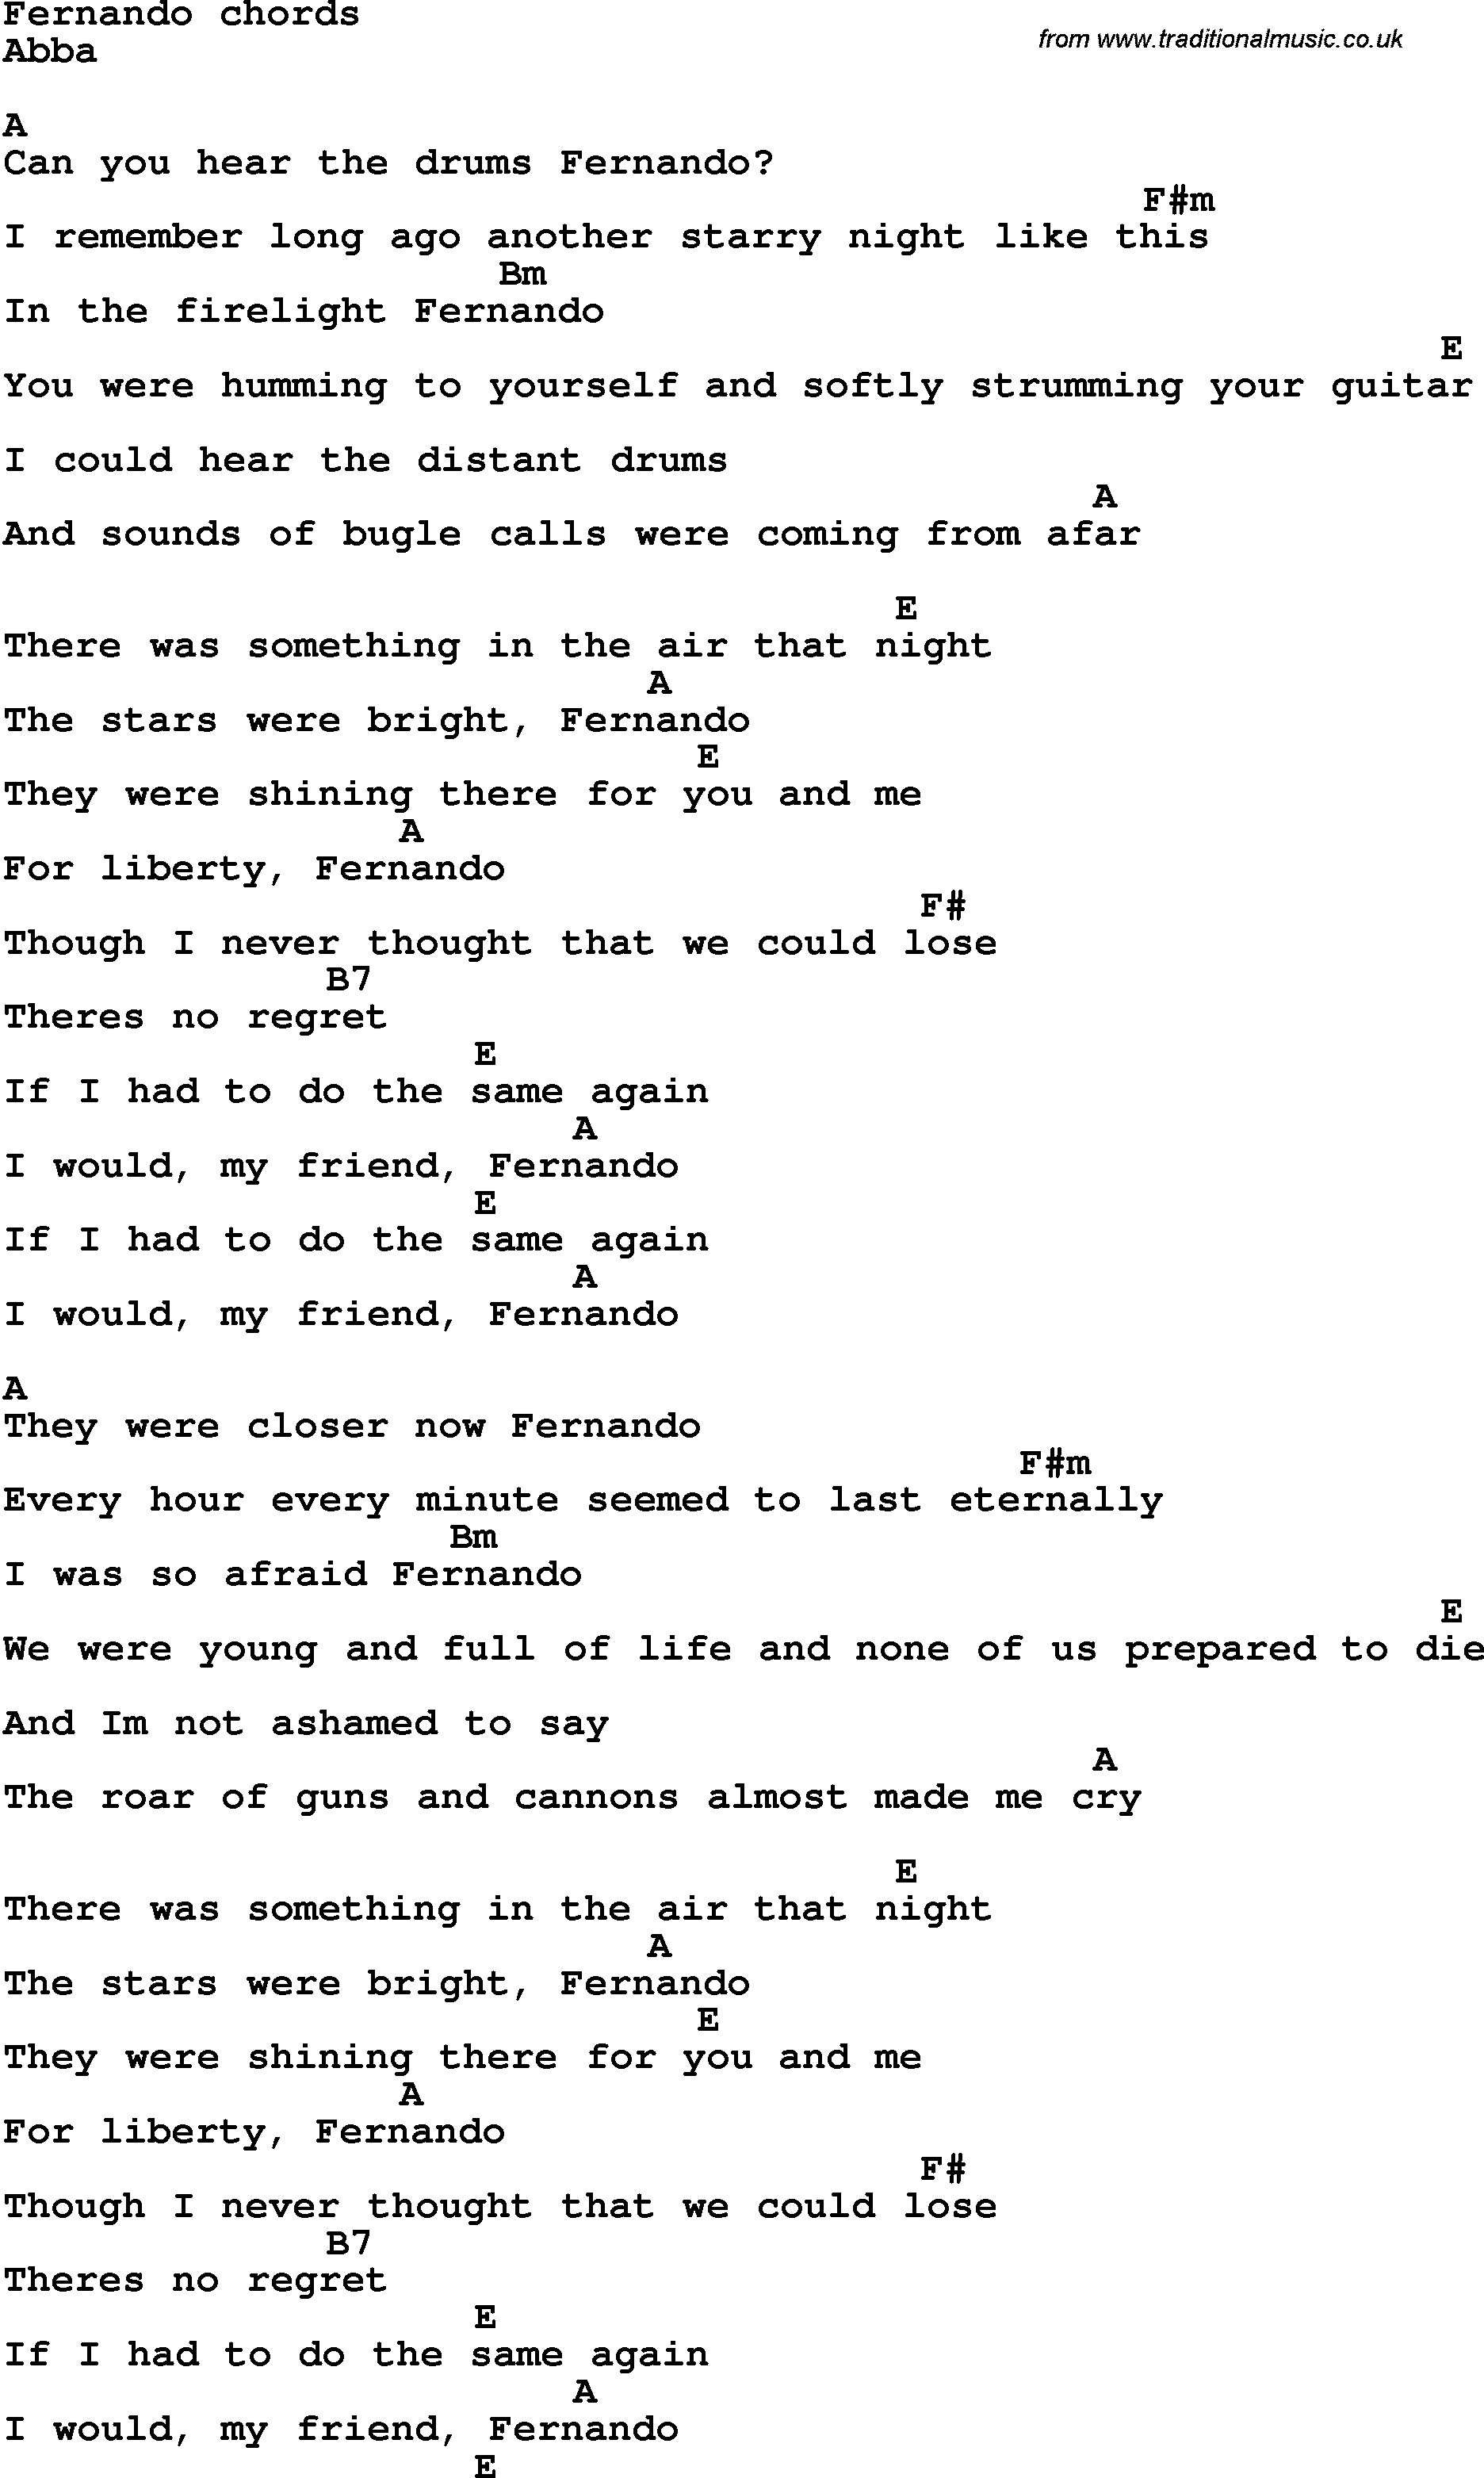 Song Lyrics with guitar chords for Fernando